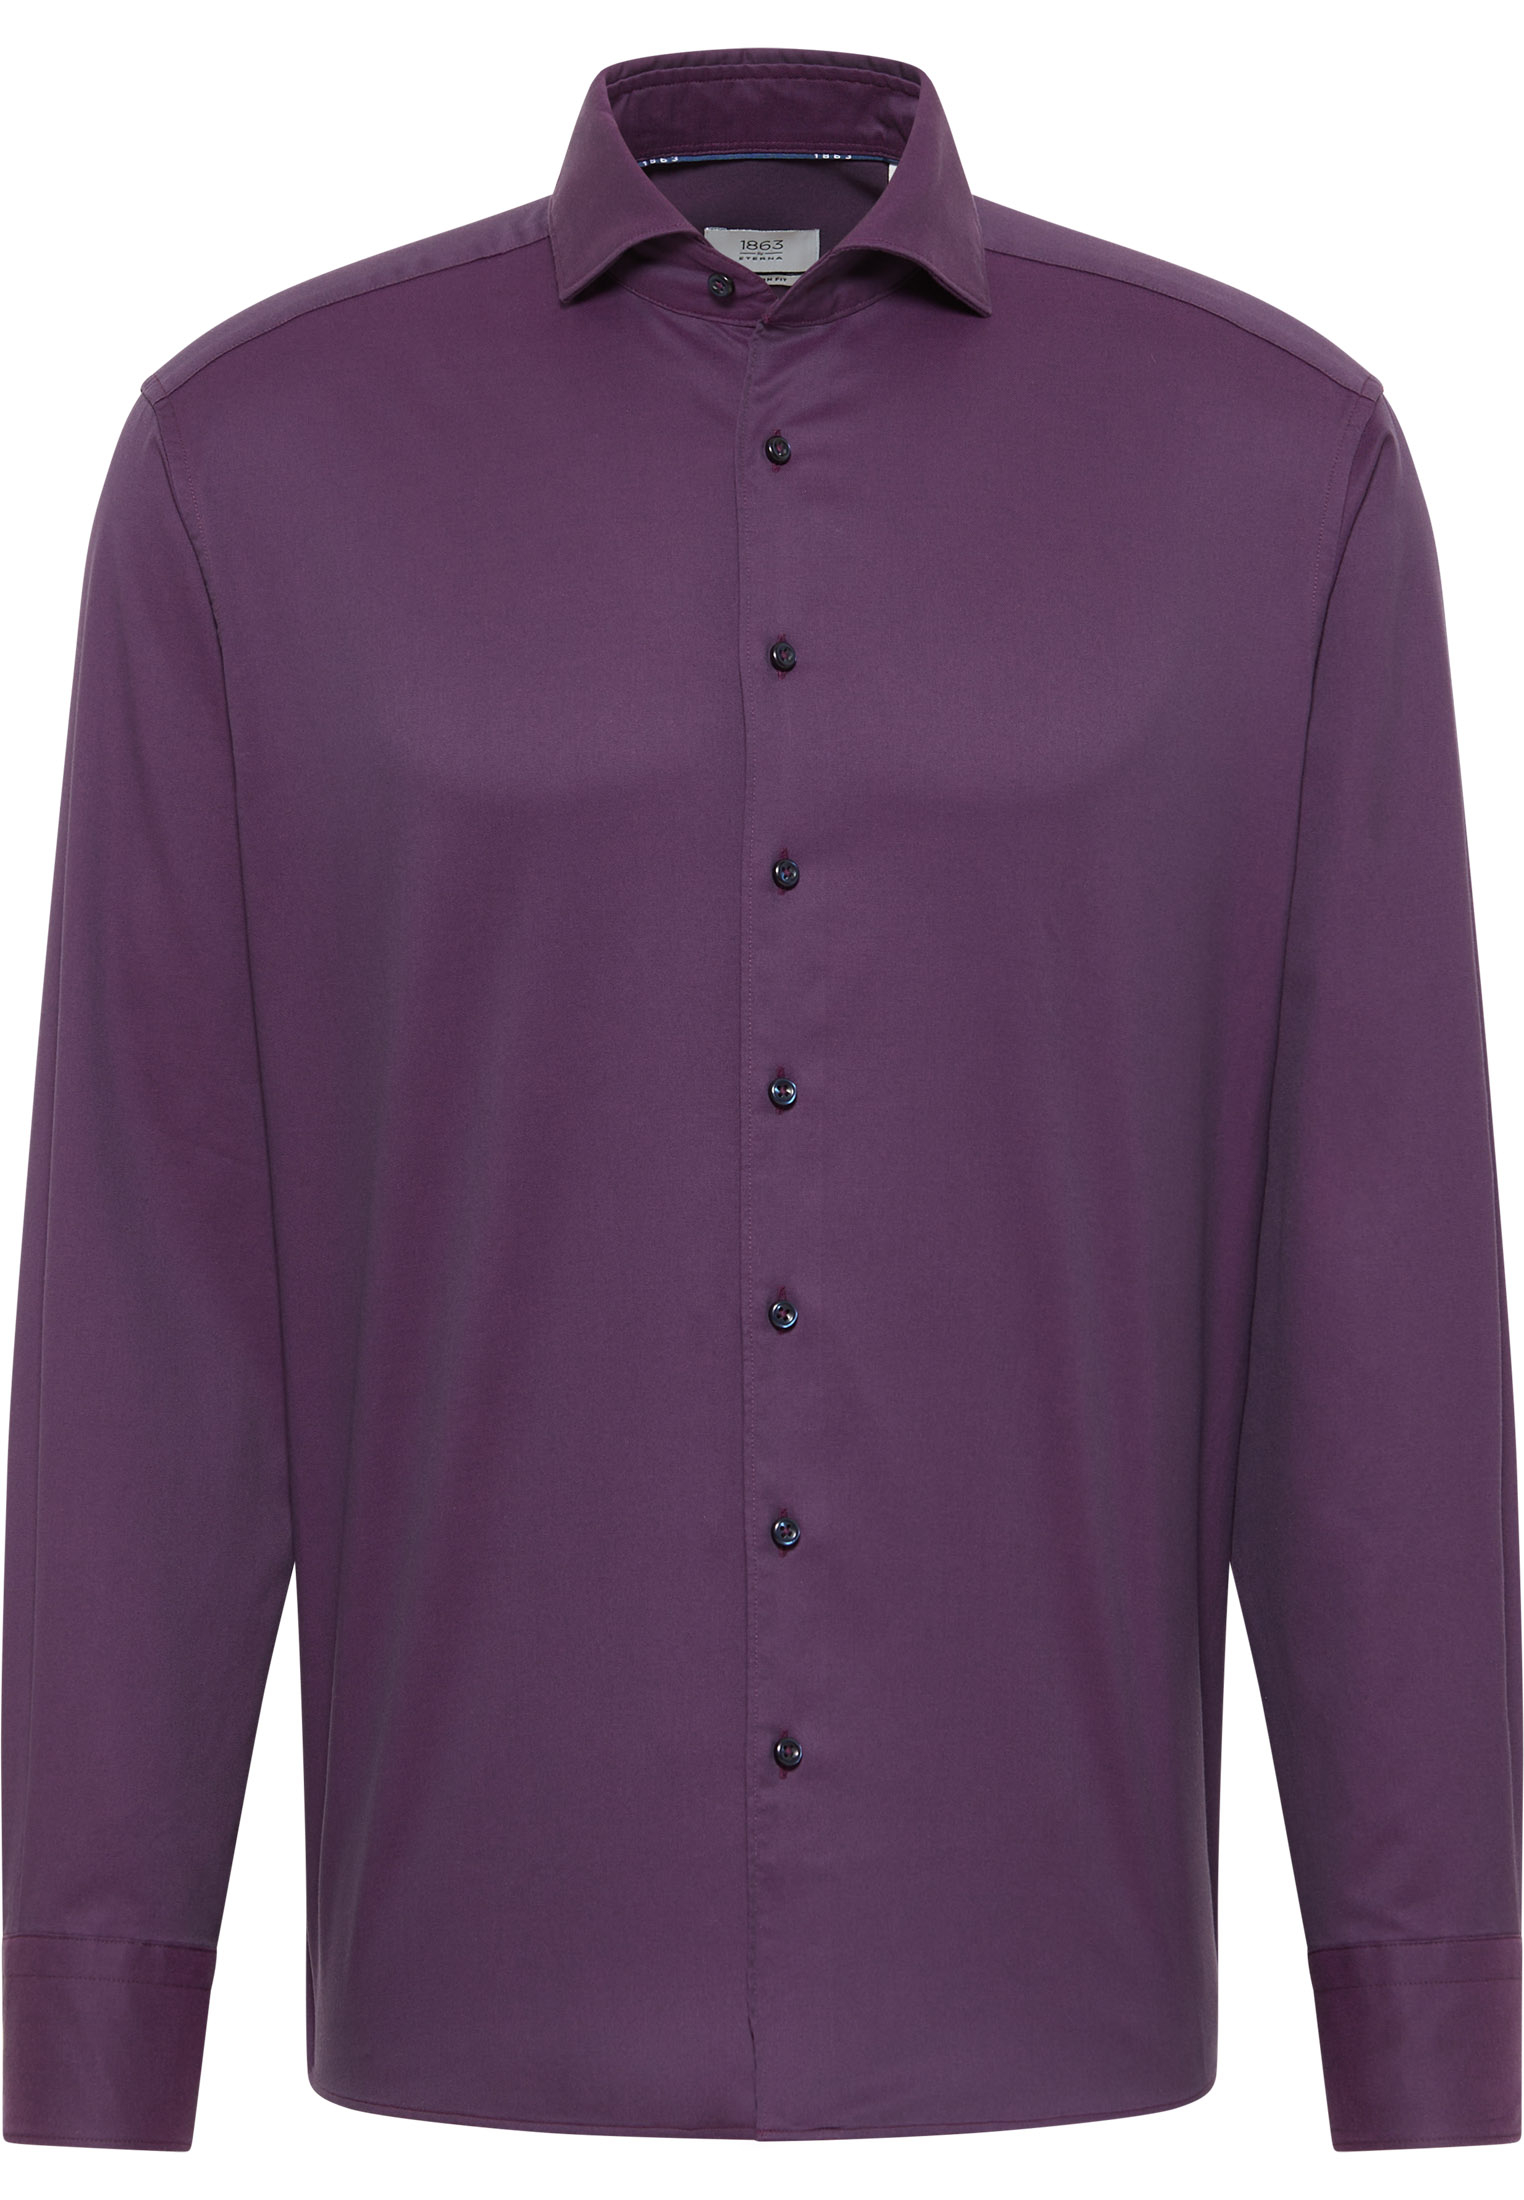 MODERN FIT Soft Luxury Shirt in burgundy plain